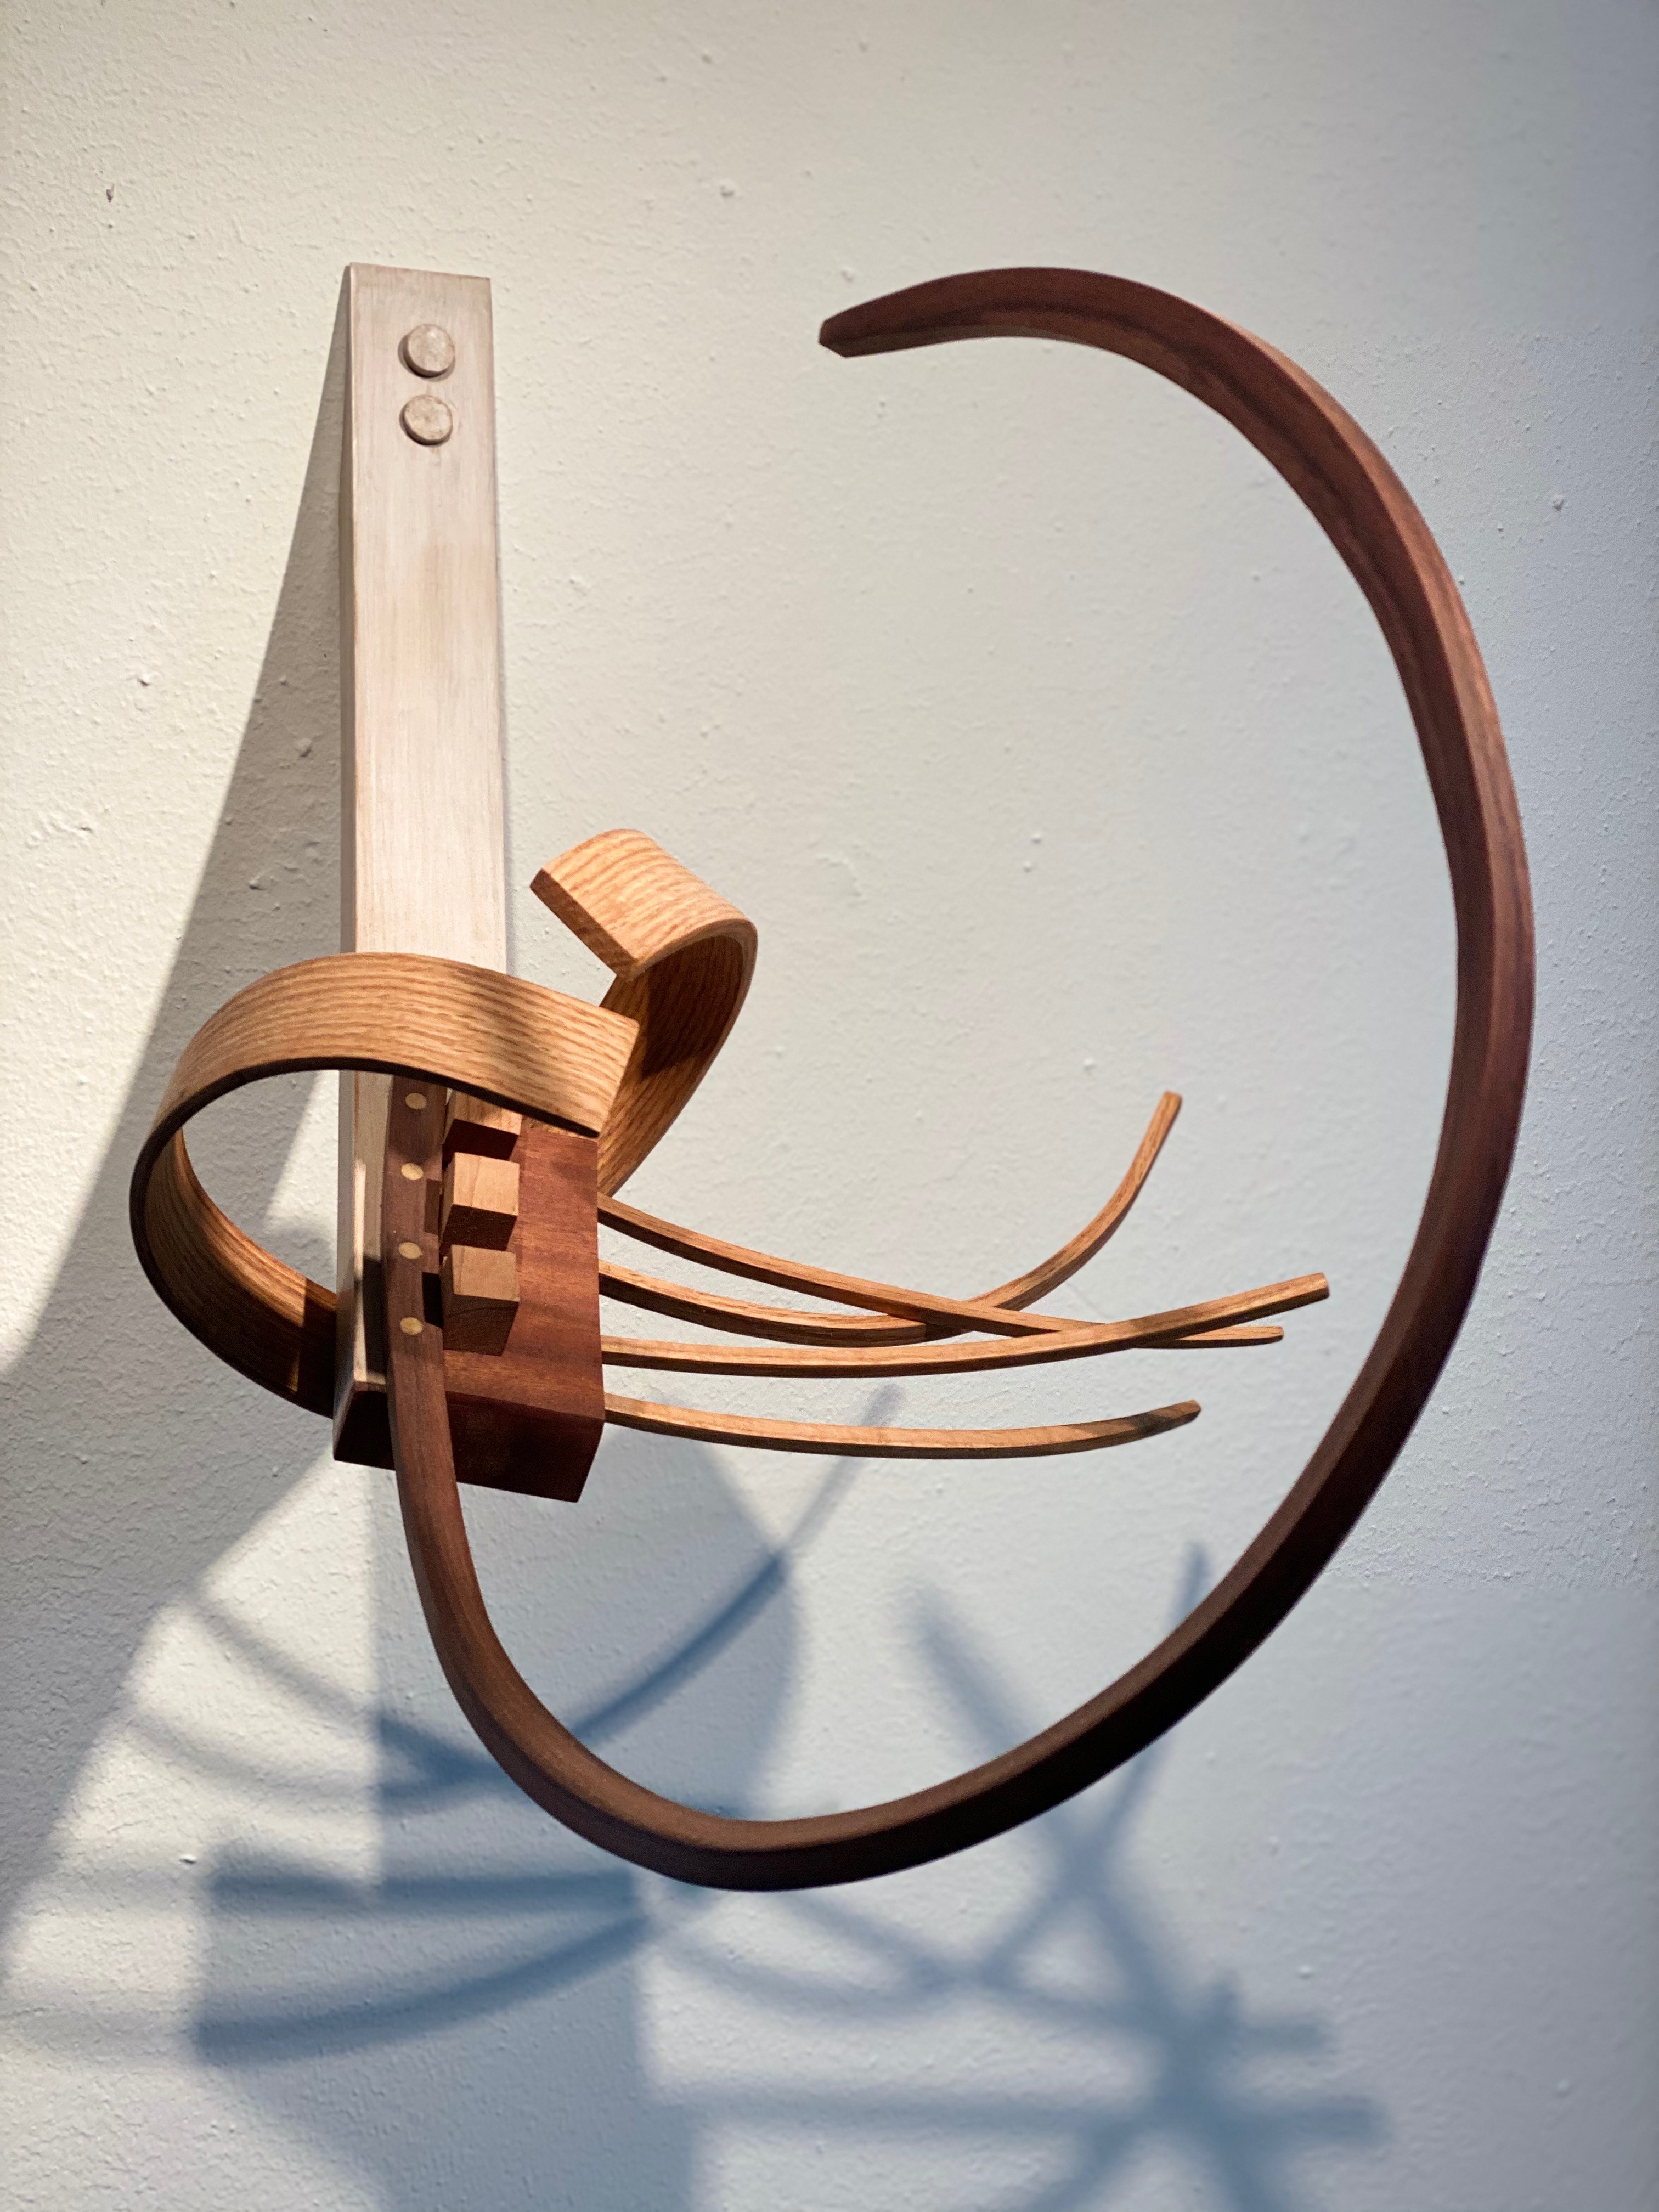 Rick Maxwell bent wood archive sculpture